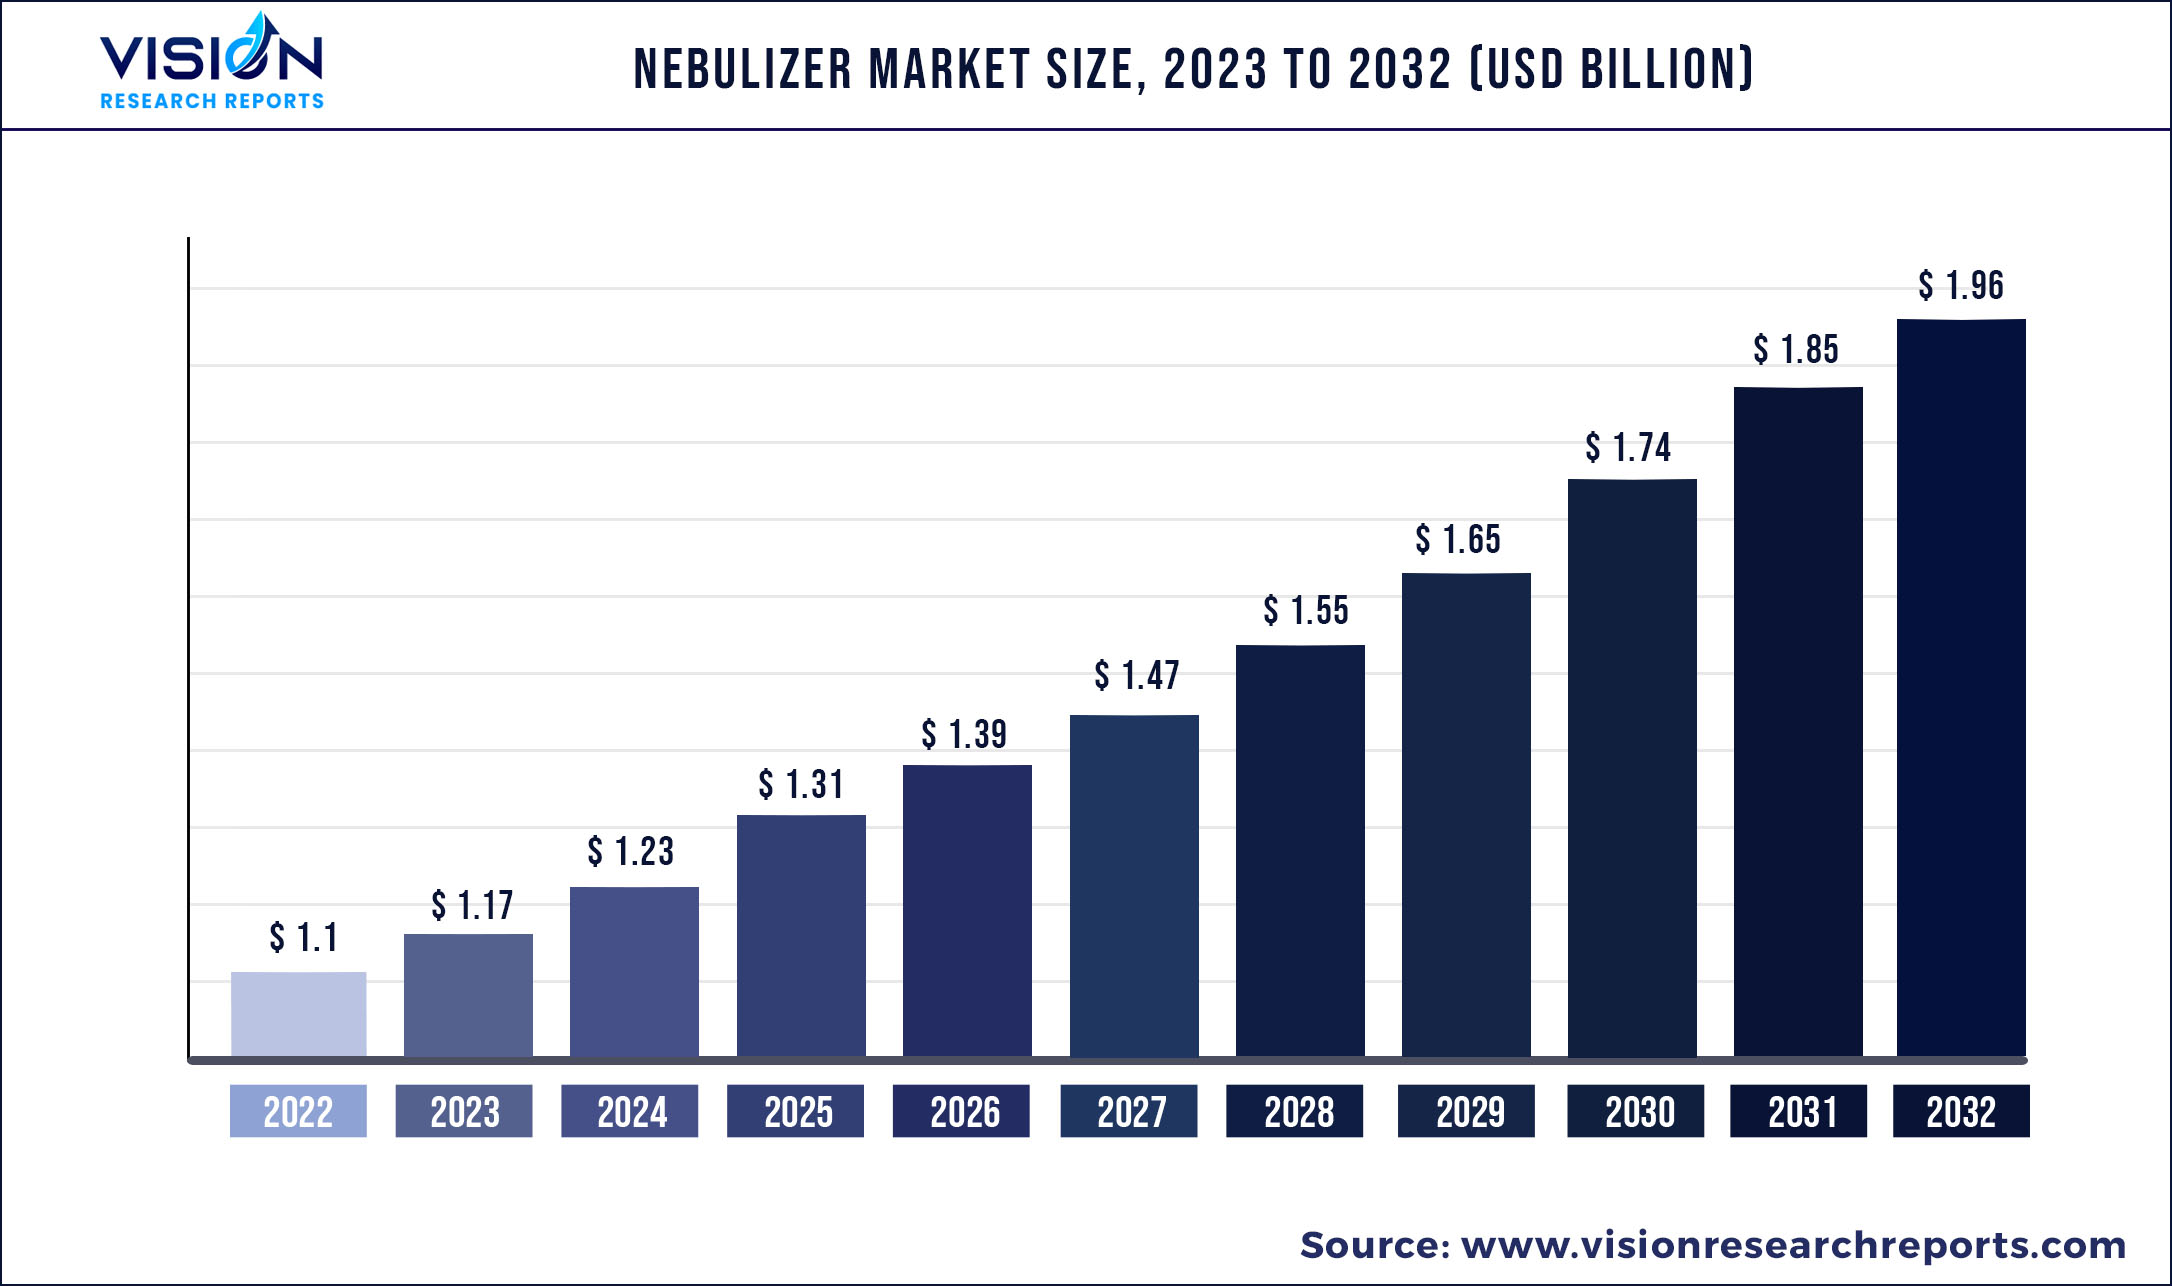 Nebulizer Market Size 2023 to 2032